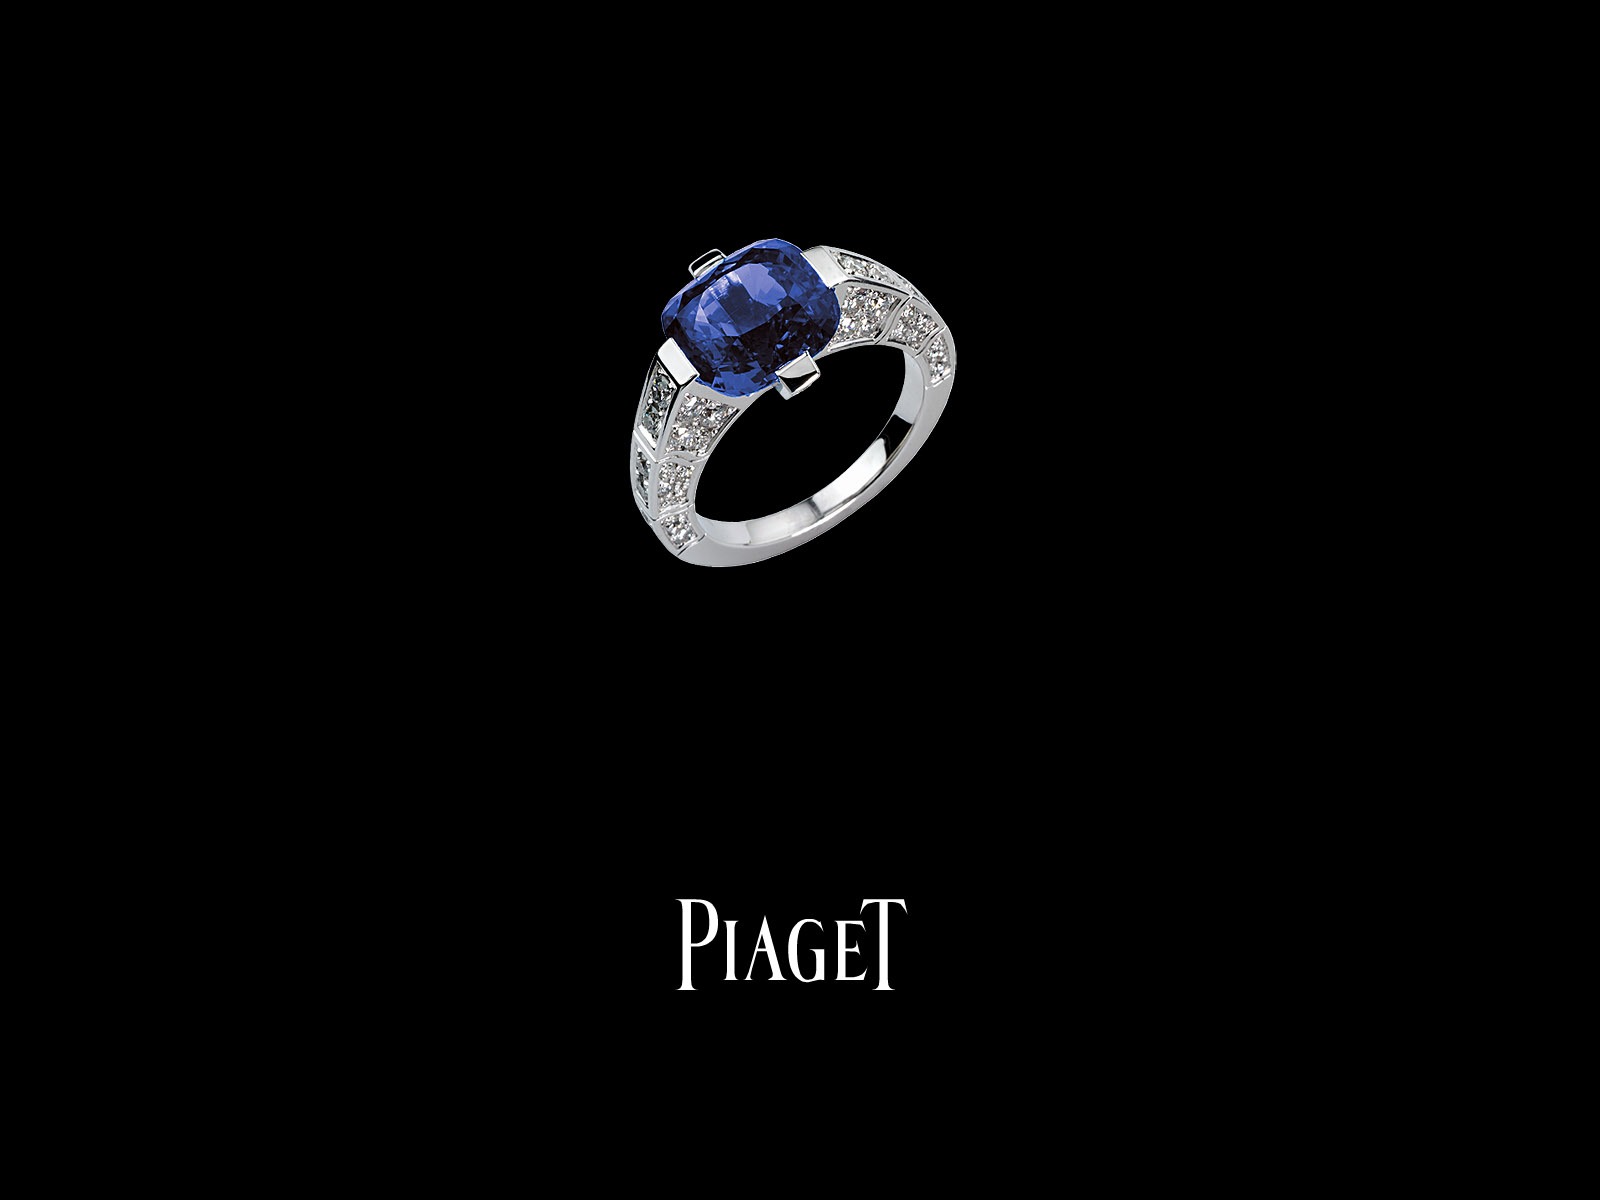 Piaget diamond jewelry wallpaper (4) #19 - 1600x1200